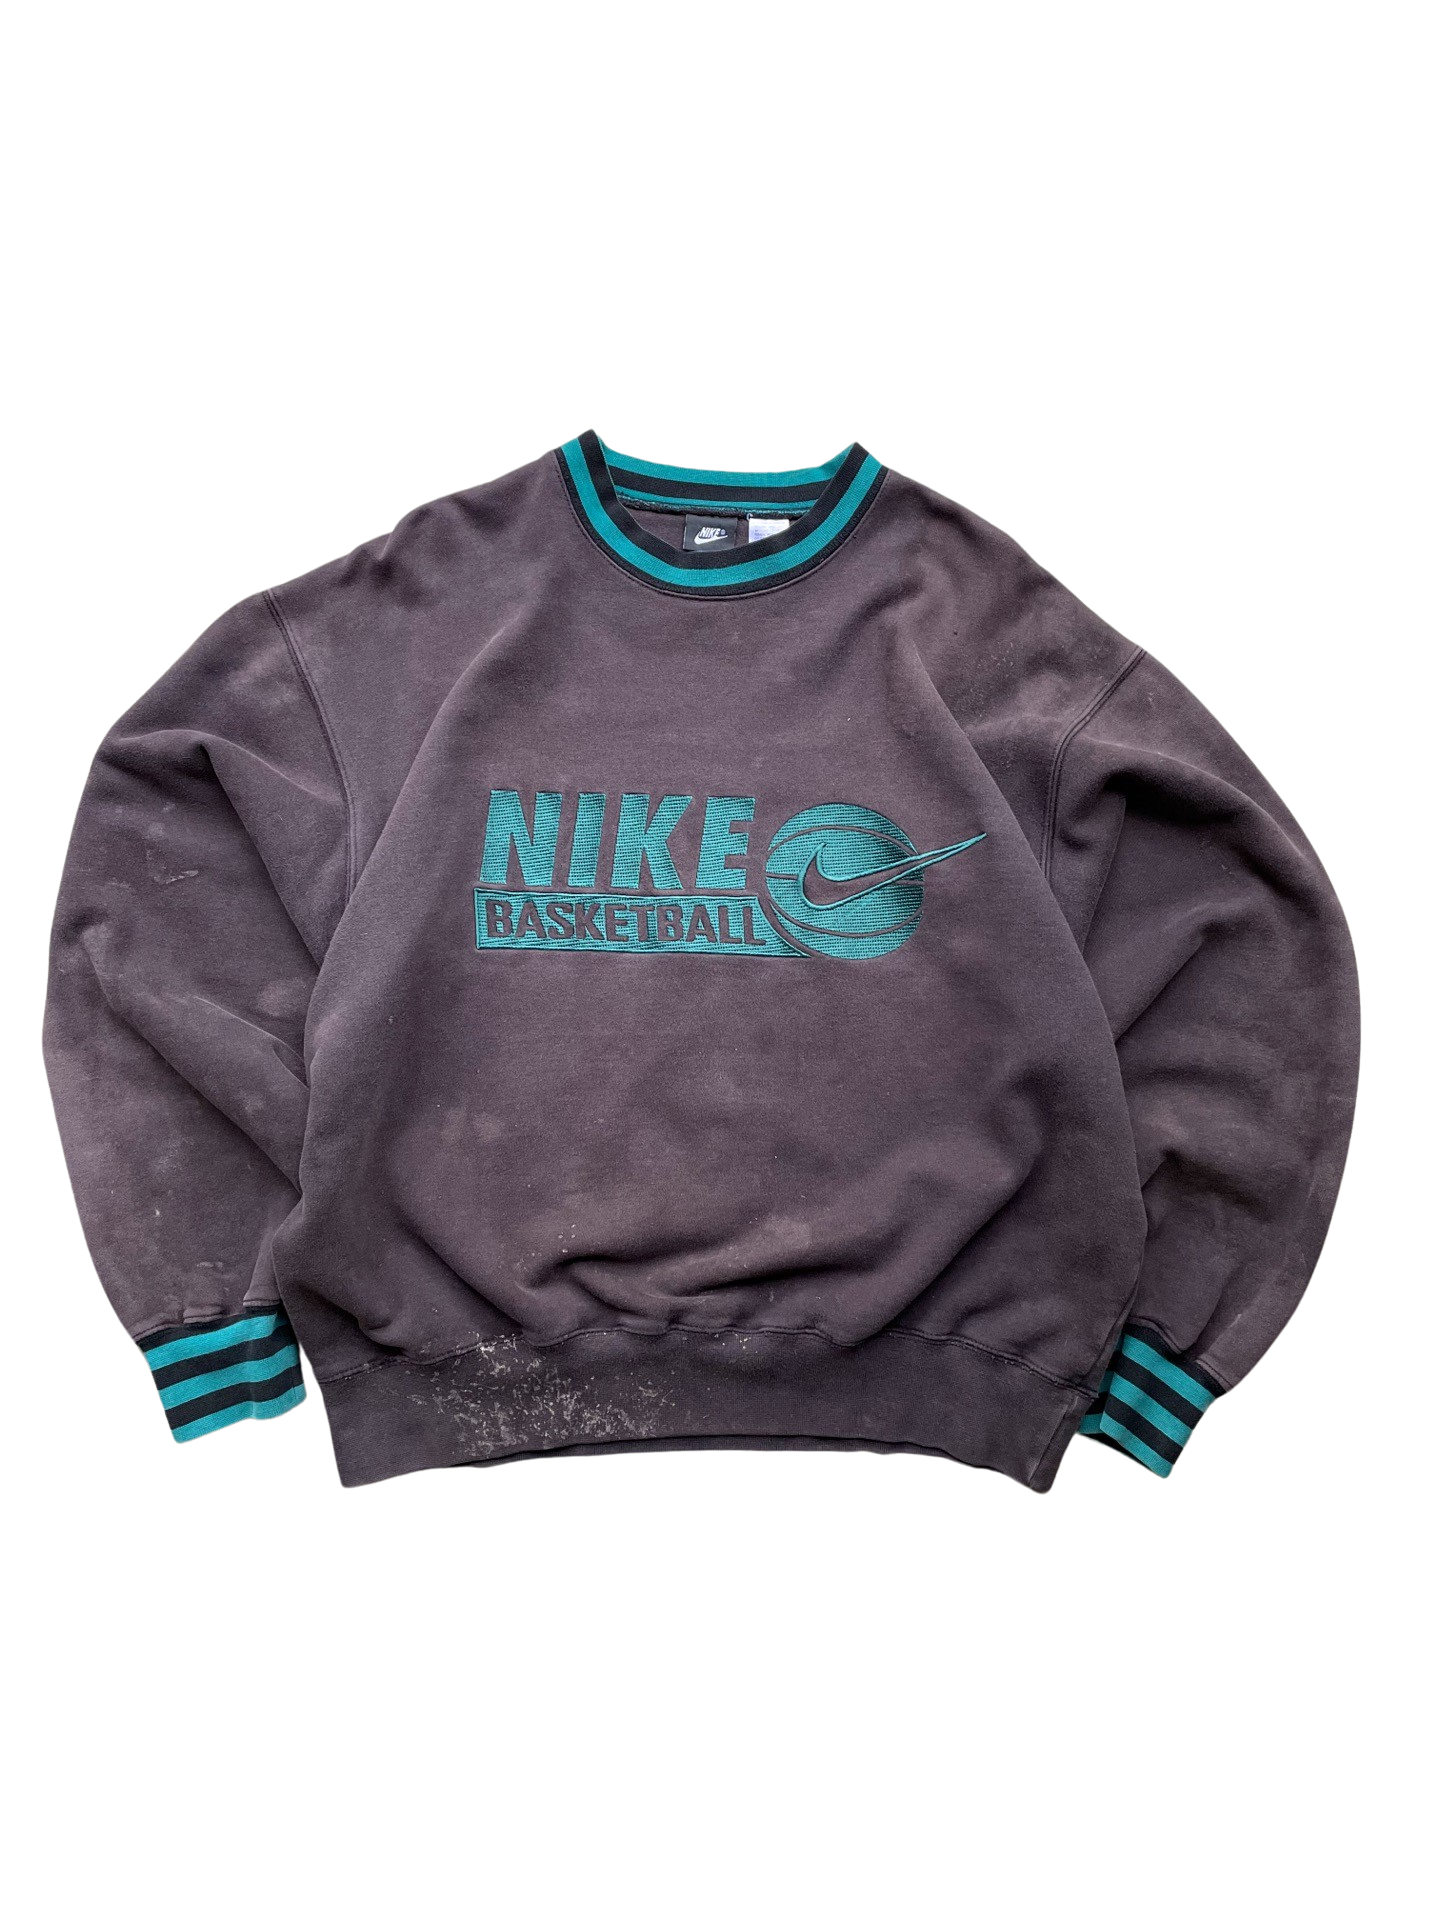 Vintage Nike Basketball Sweatshirt